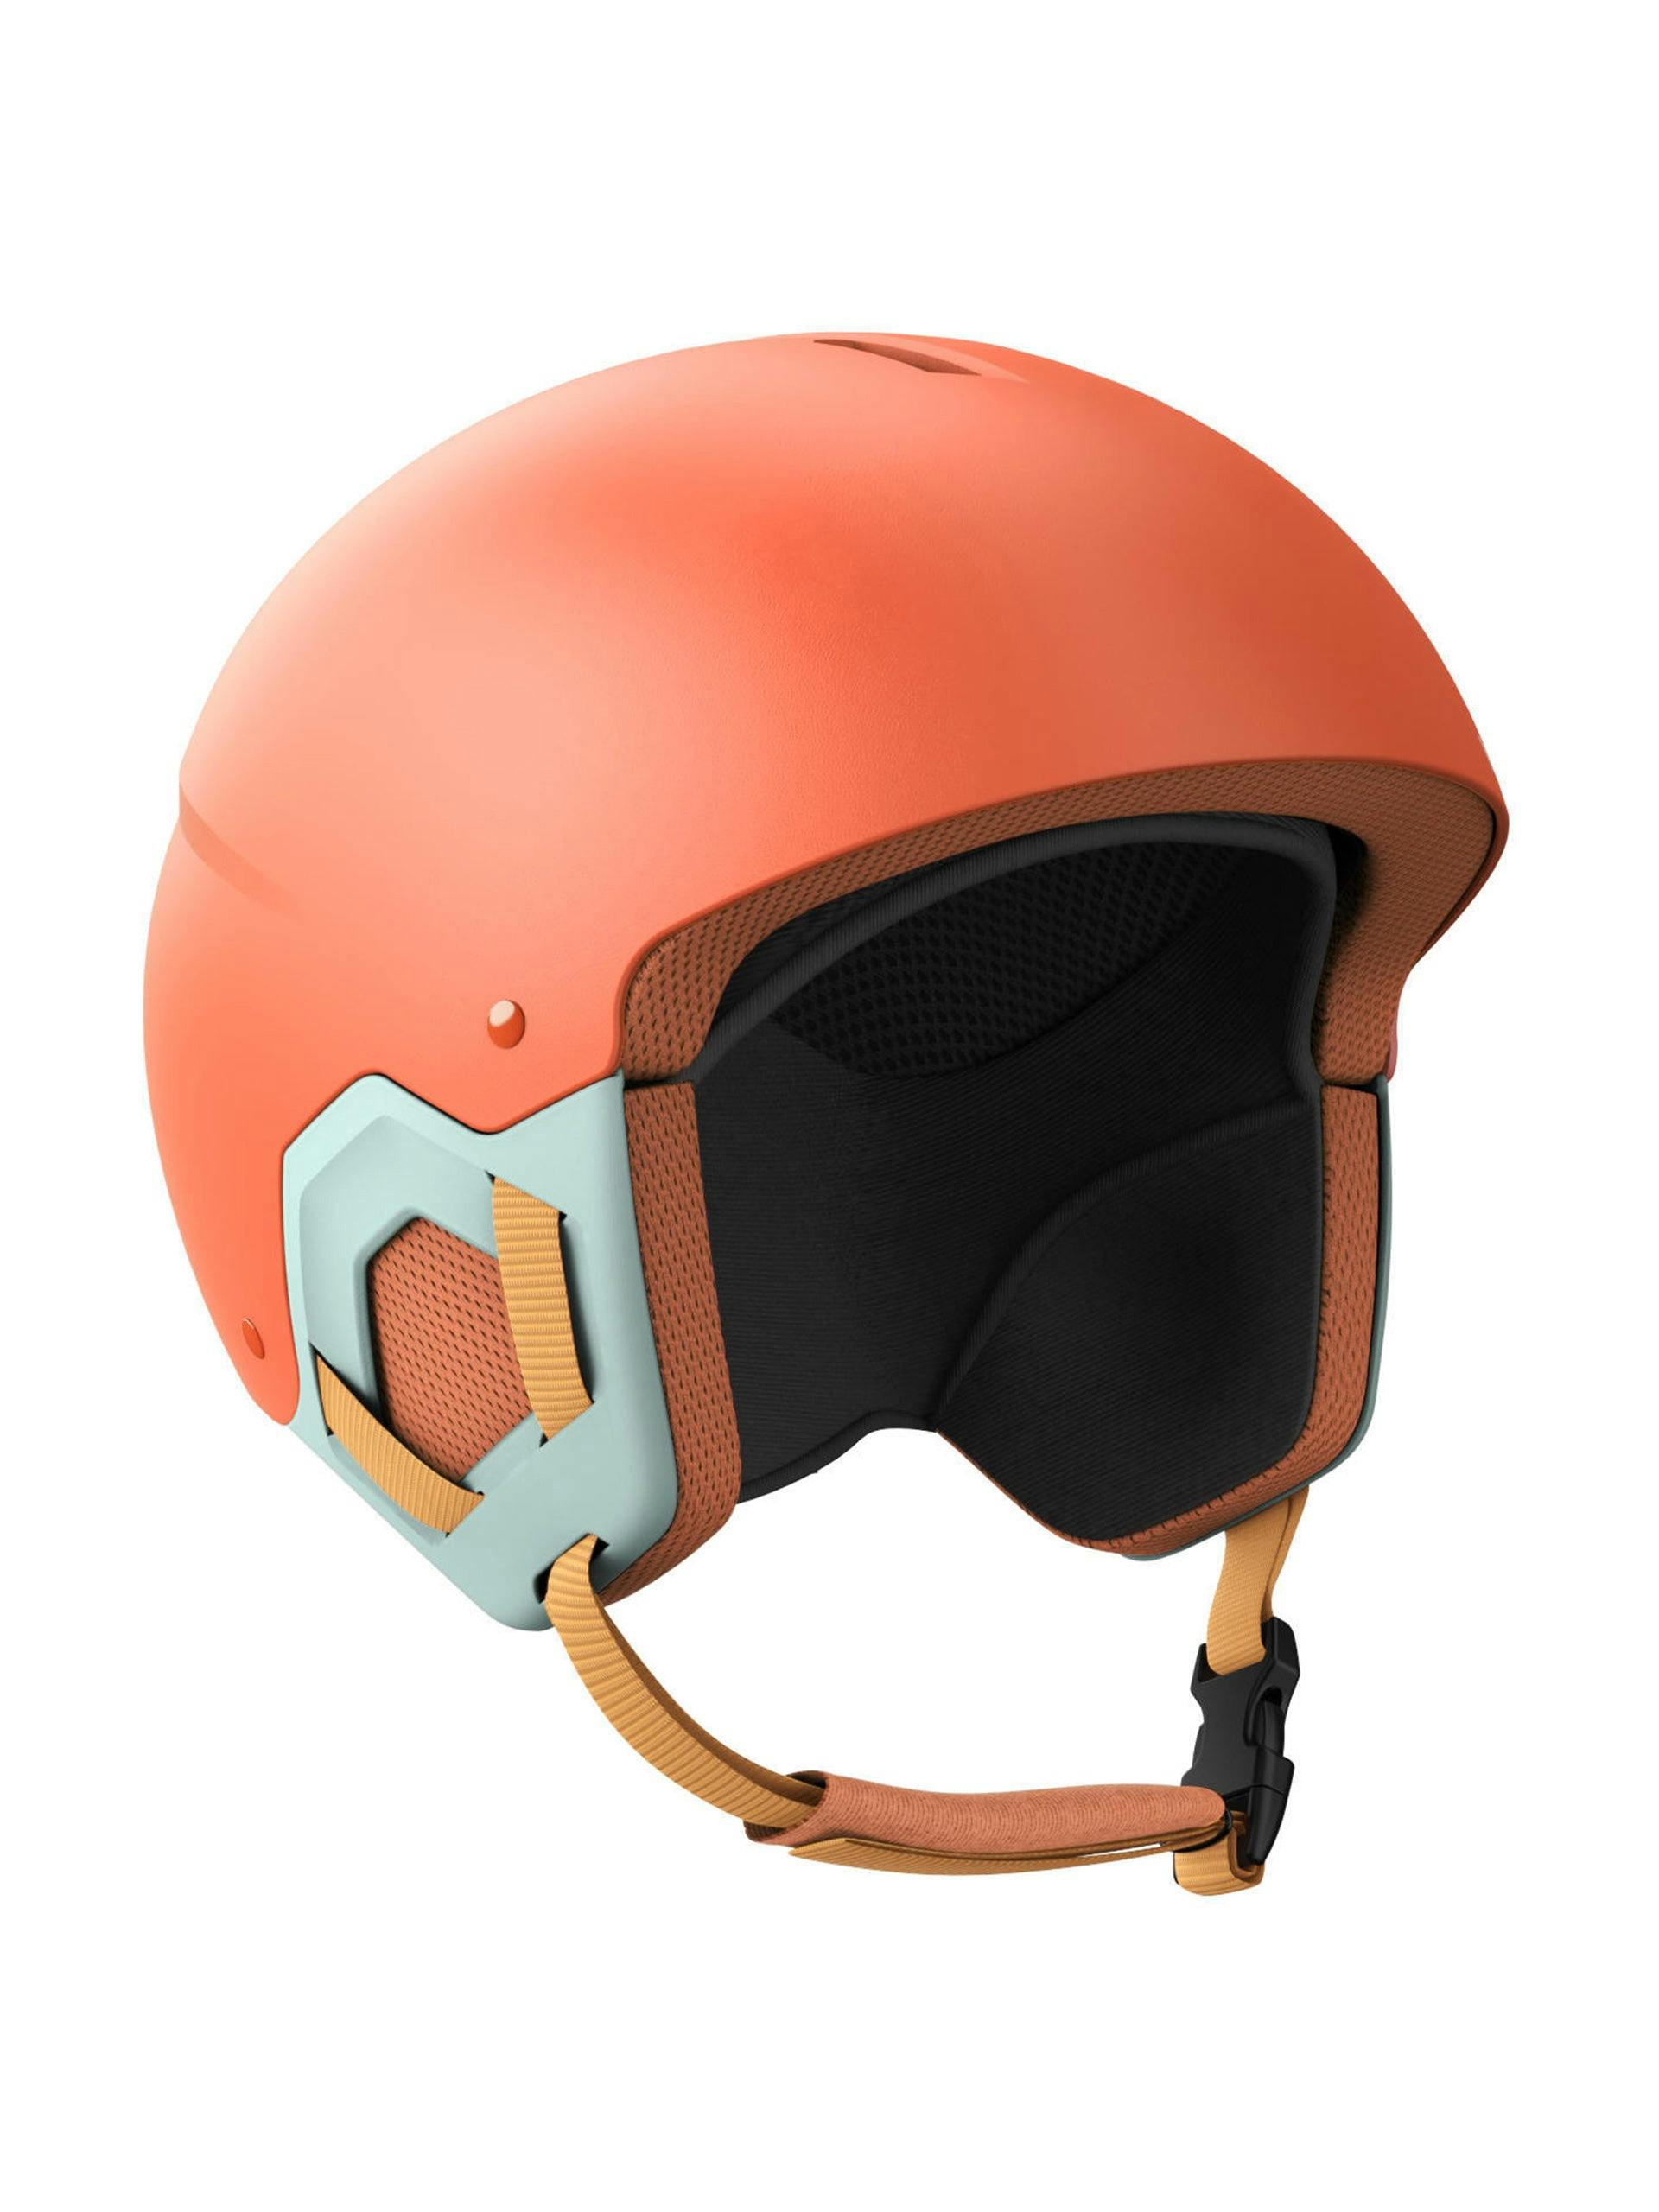 Orange ski helmet